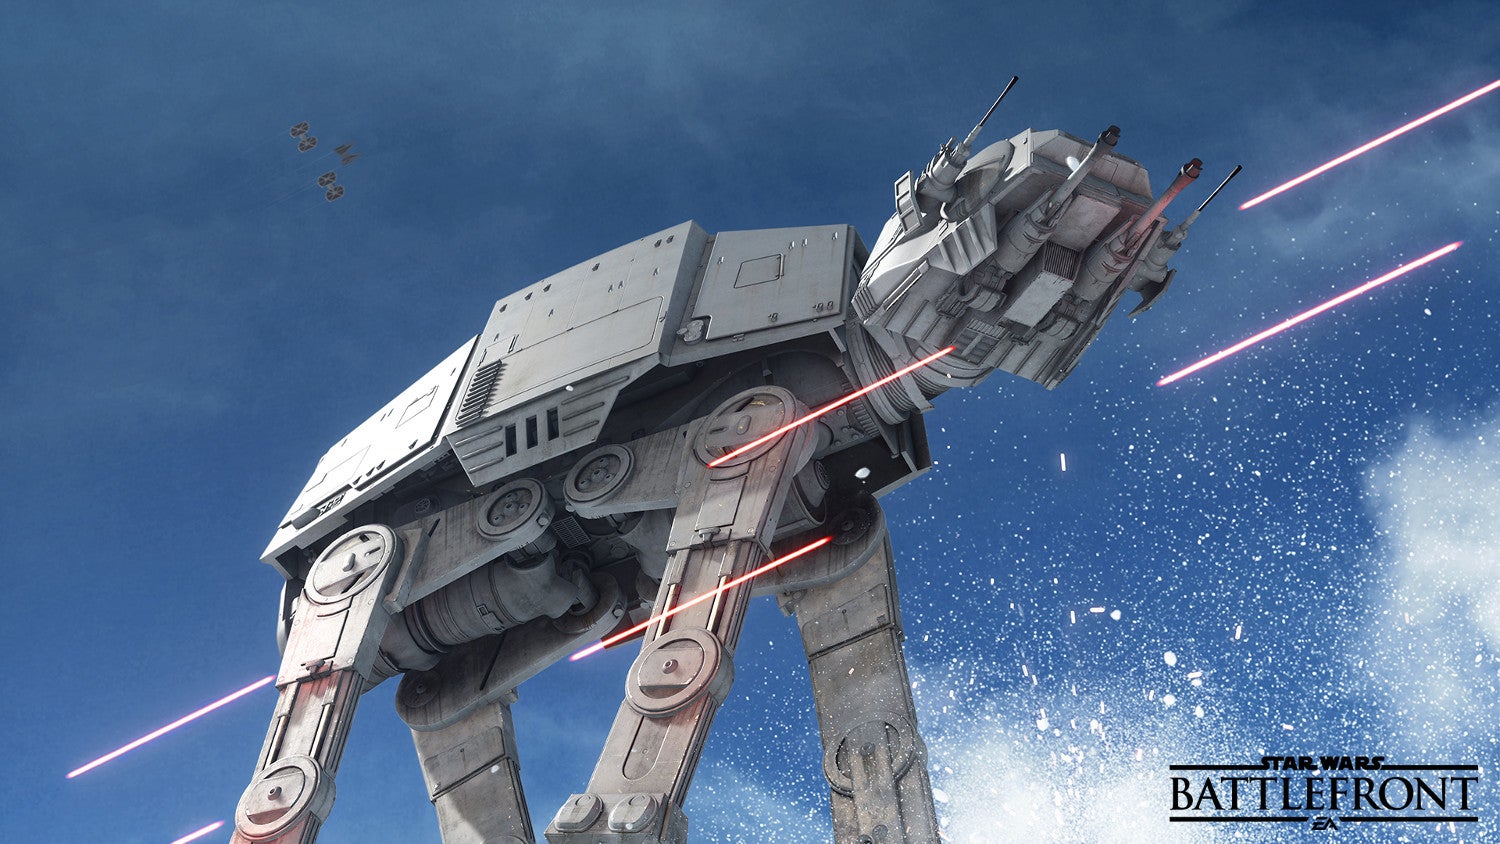 Obrazki dla Mirror's Edge Catalyst oraz Star Wars Battlefront trafią do EA i Origin Access